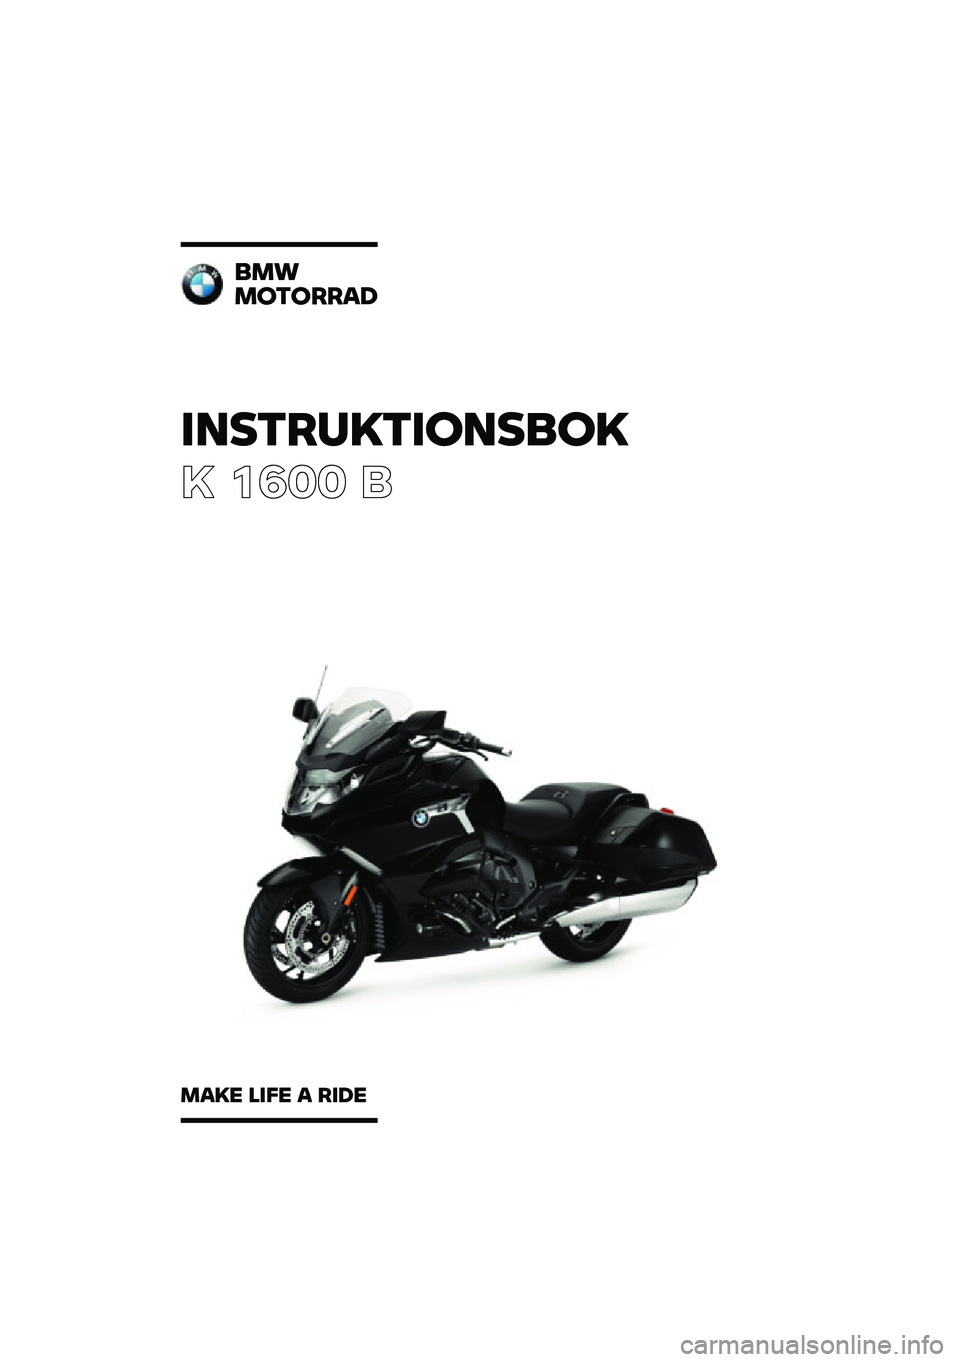 BMW MOTORRAD K 1600 B 2020  Instruktionsbok (in Swedish) �������\b���	���
�	�\b
� ���� �	
�
��\f
��	��	���
�
��
�\b� ���� �
 ���� 